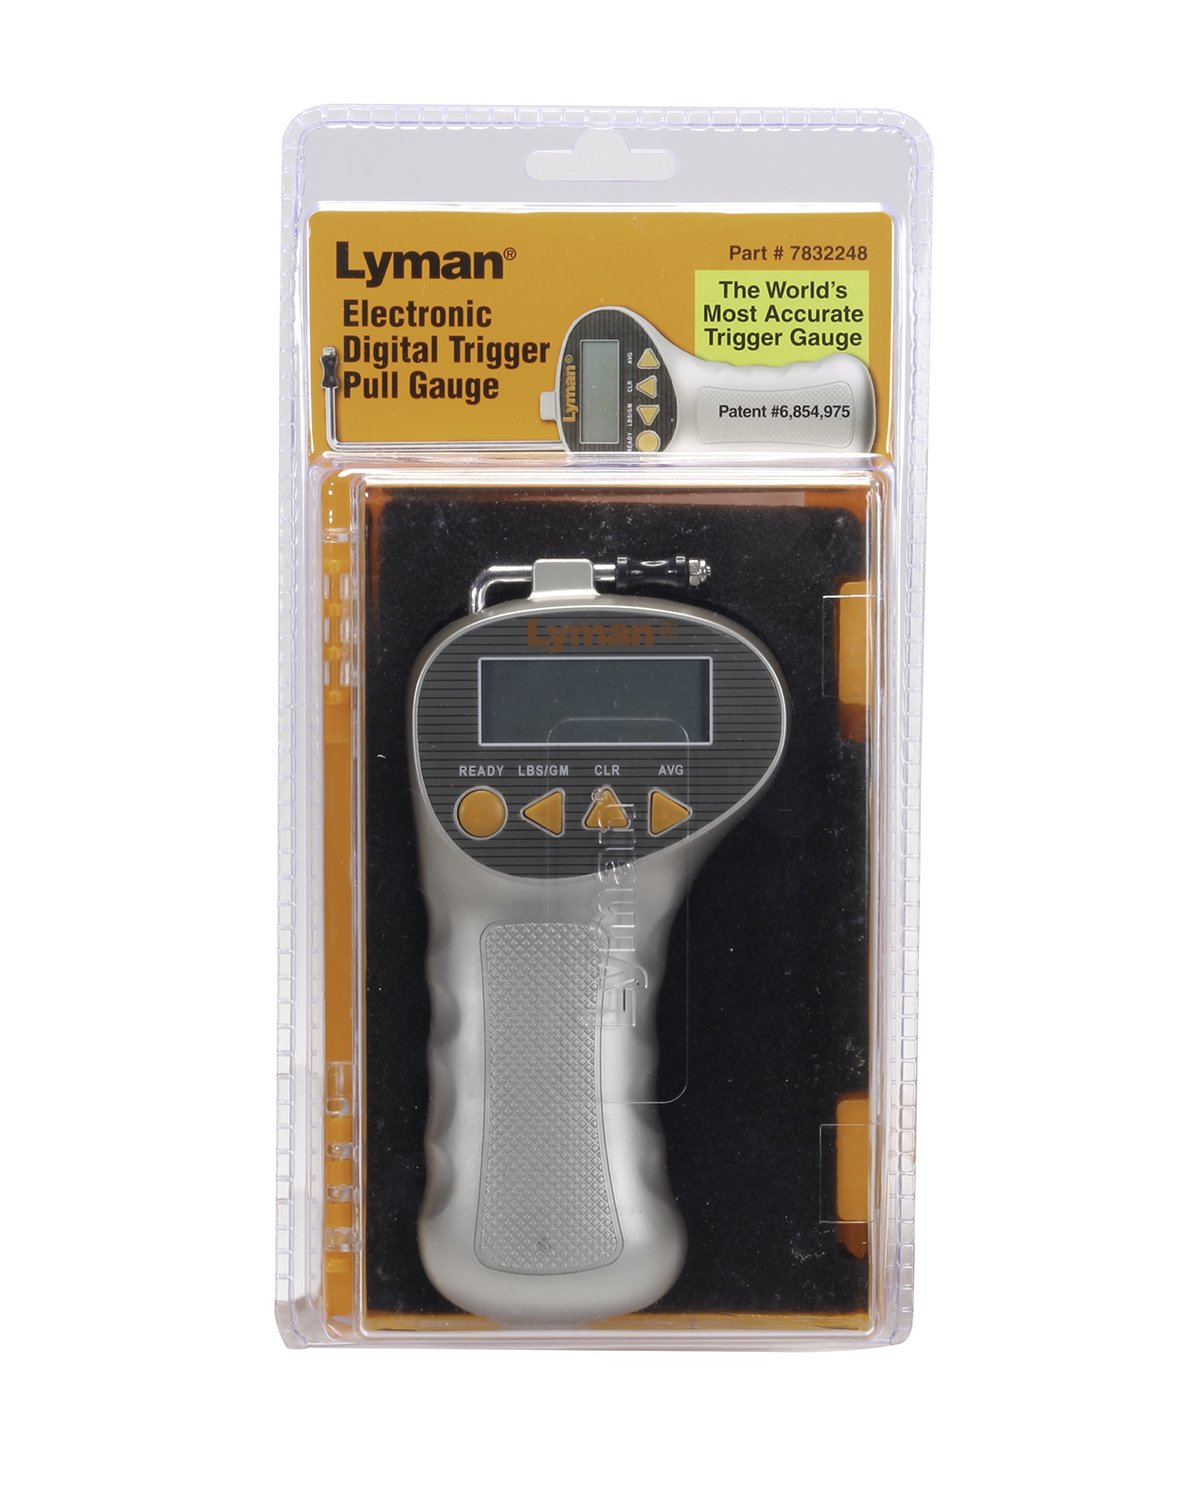 Lyman 7832248 Electronic Digital Trigger Pull Gauge,Multi